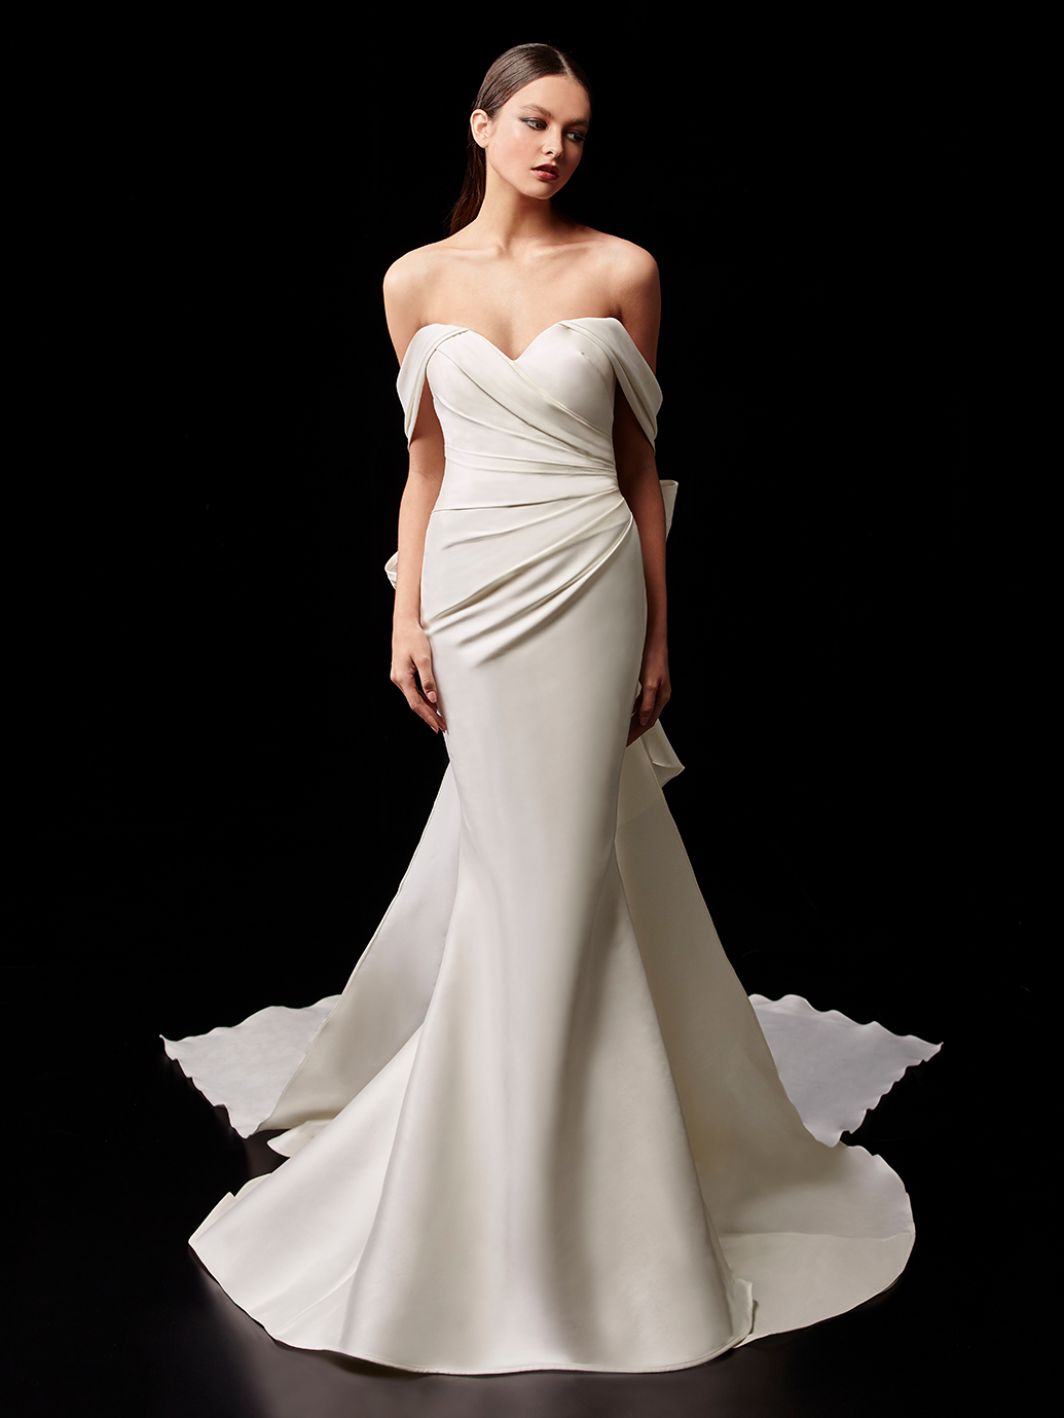 9 Figure Flattering Ruched Wedding Dresses Vows Bridal 